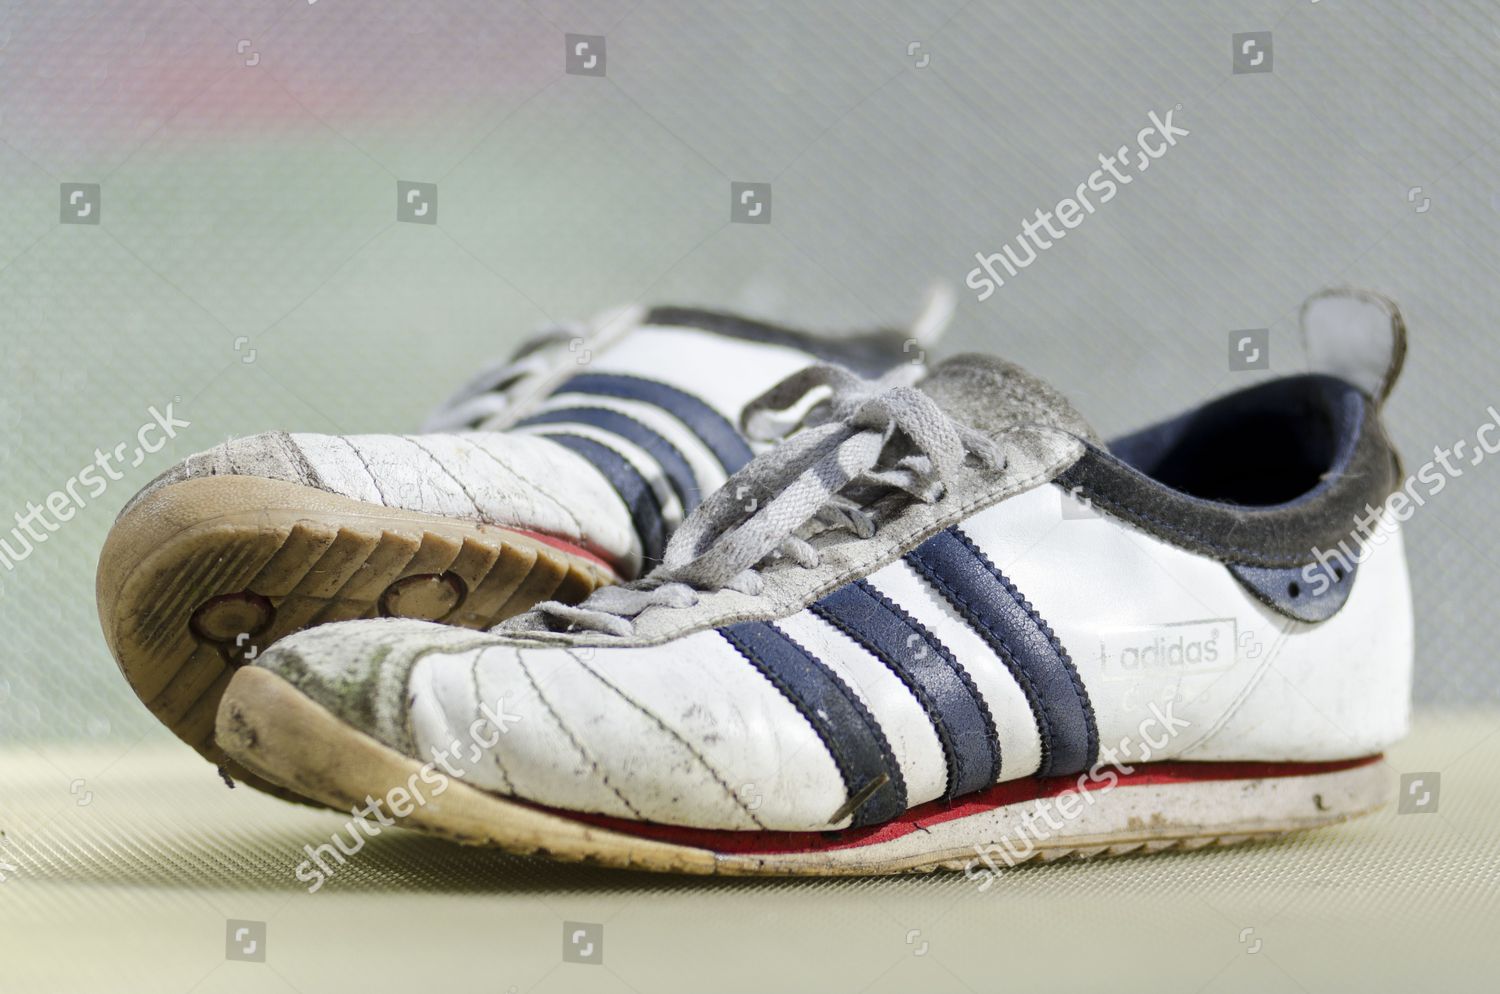 Pair Worn Adidas Cup 68 Trainers - Foto de stock de contenido editorial: de stock Shutterstock